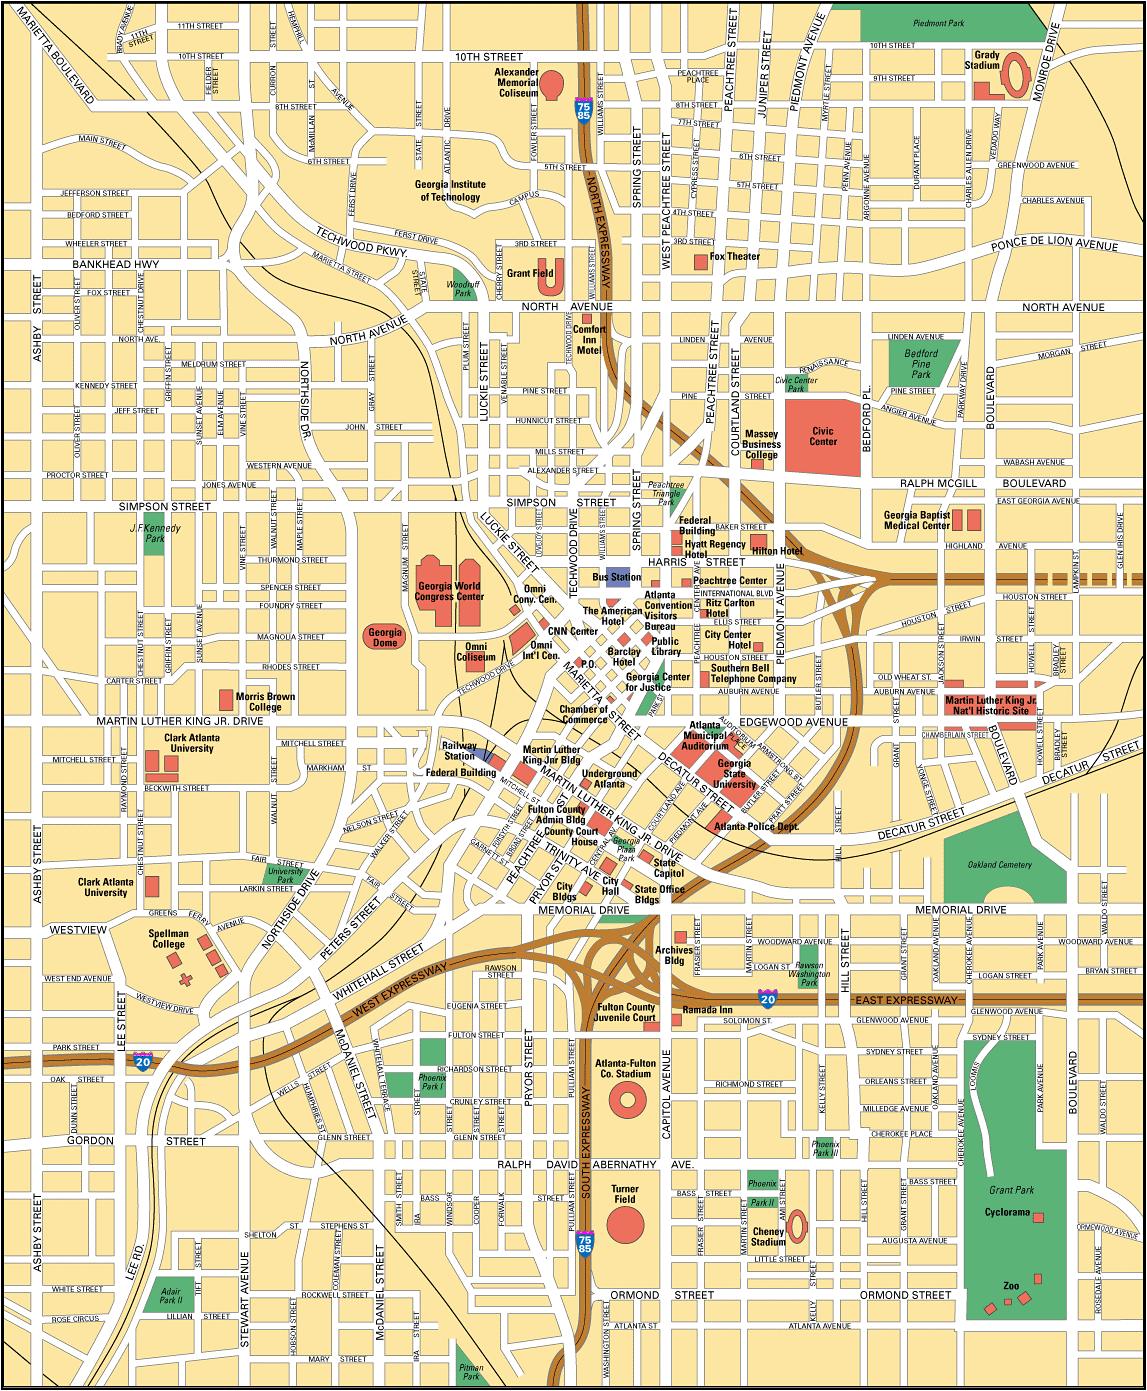 Map of Atlanta: offline map and detailed map of Atlanta city